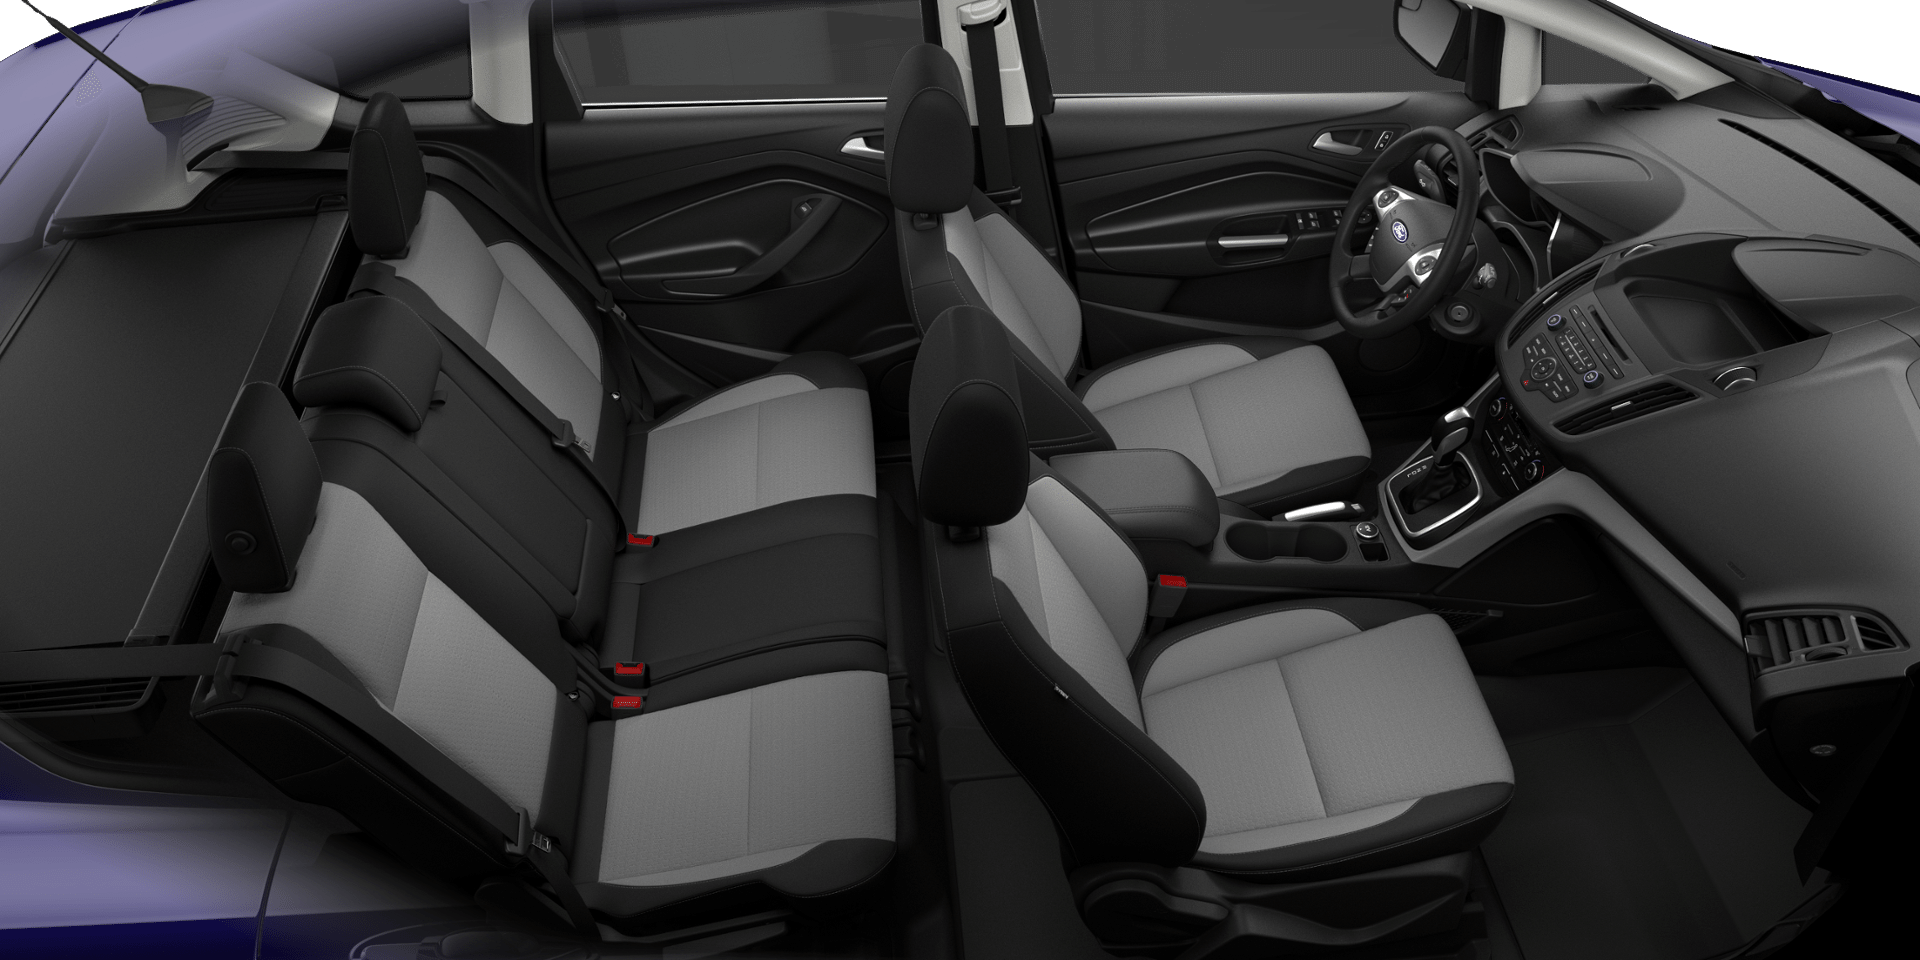 Ford C max Energi SE interior front view